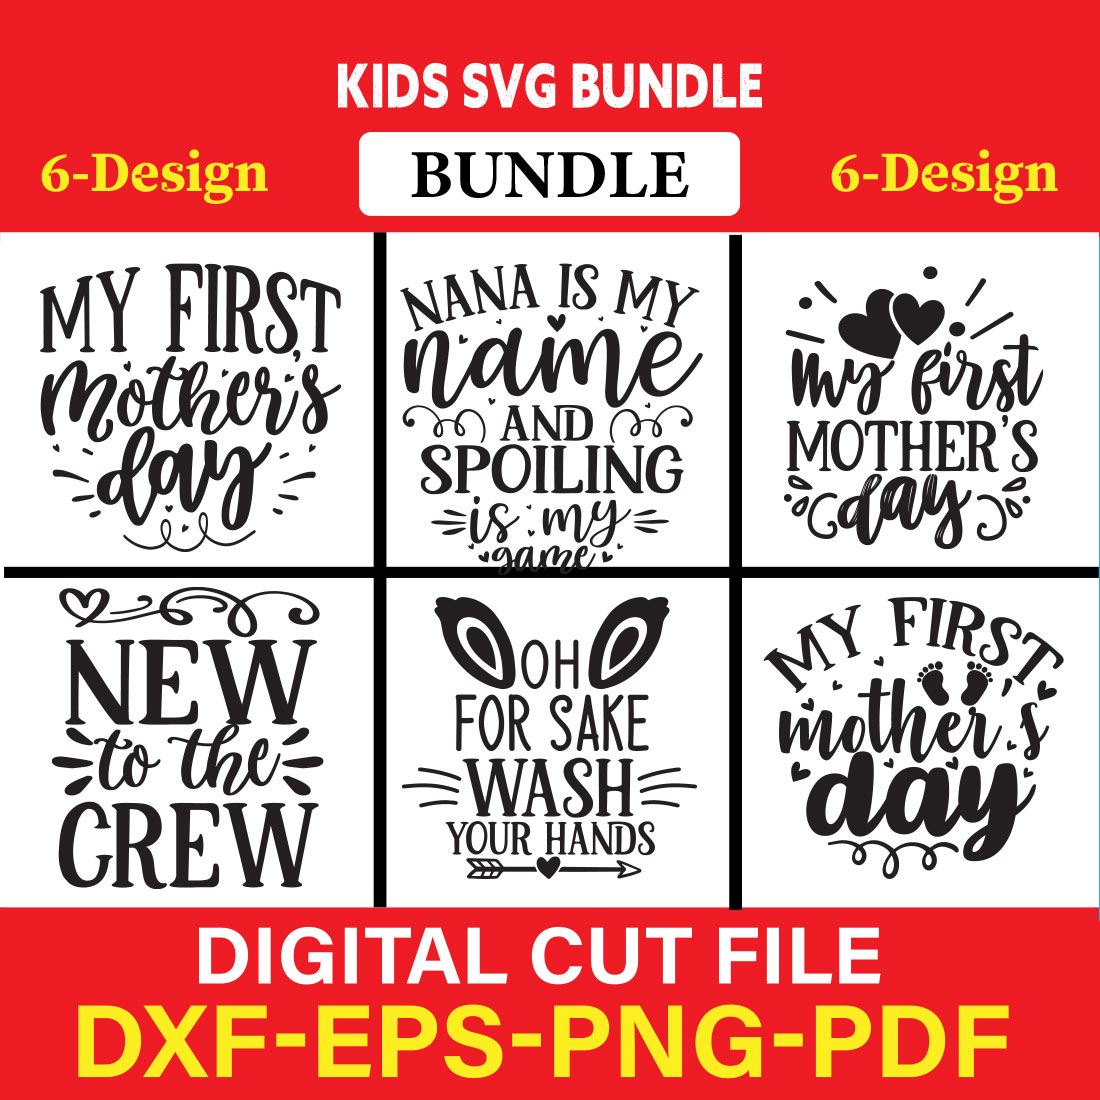 Kids T-shirt Design Bundle Vol-11 cover image.